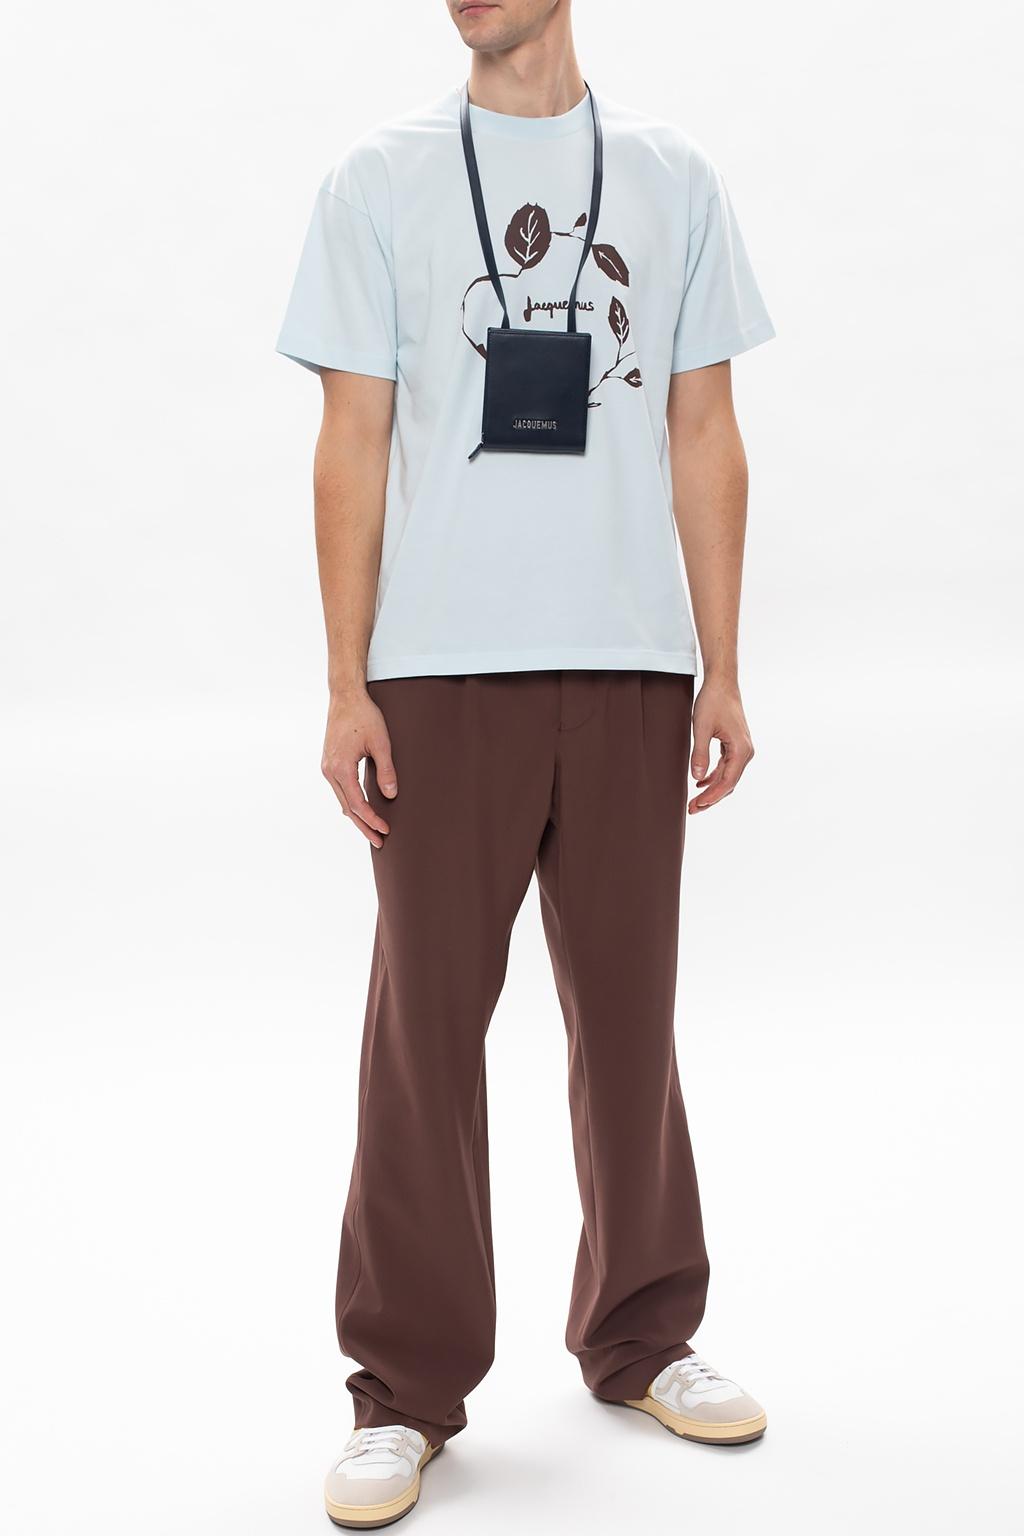 Jacquemus Cotton T-shirt With Logo Light Blue for Men - Lyst